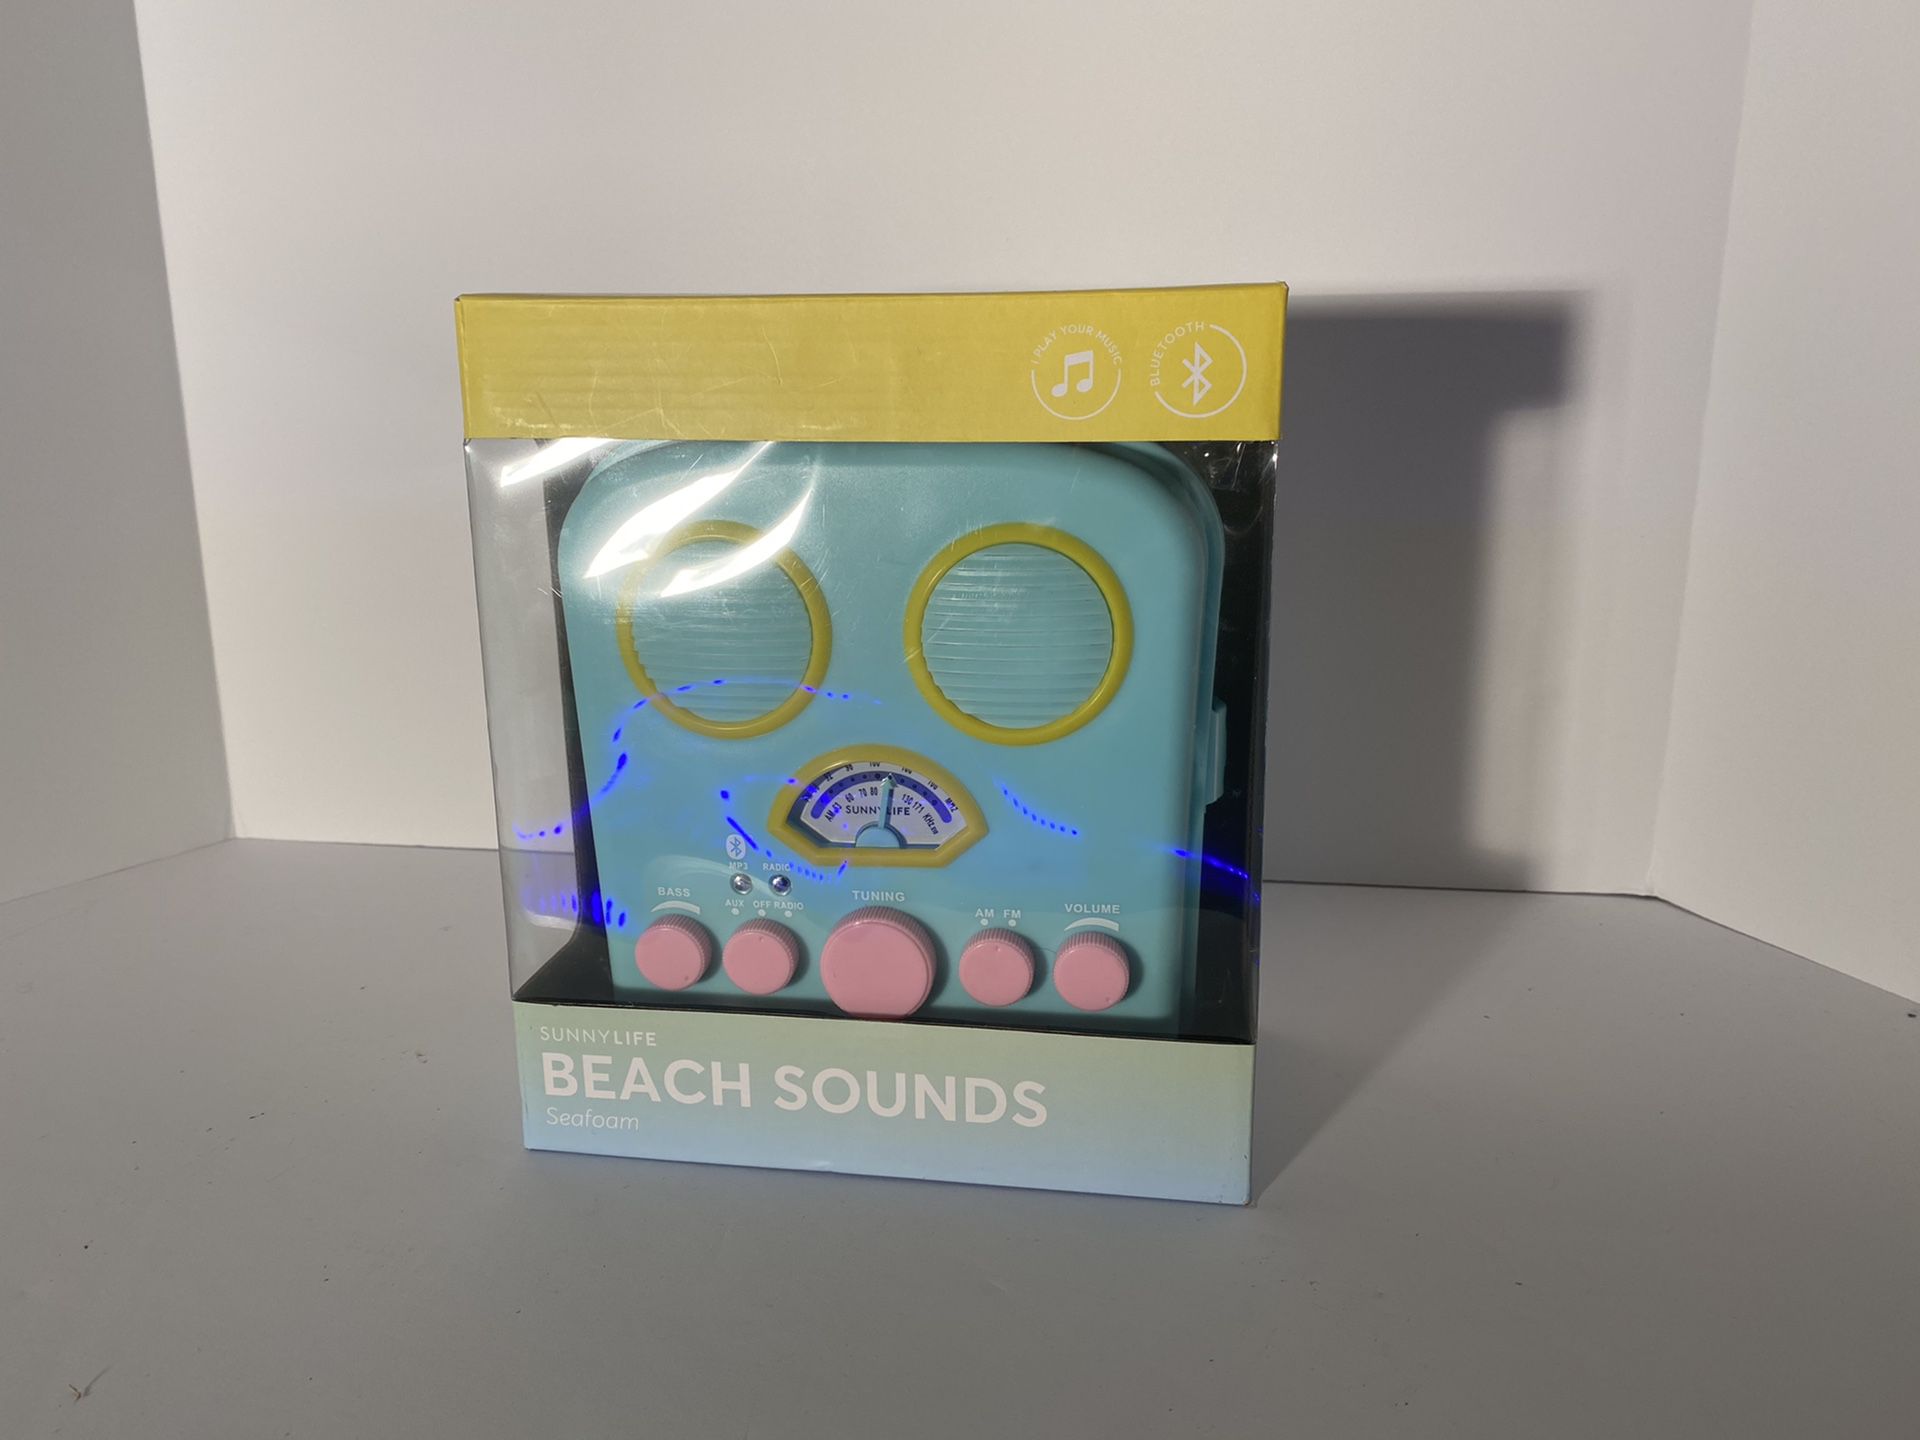 SunnyLife Beach Sounds Seafoam Wireless Bluetooth Speaker Beach. Never used